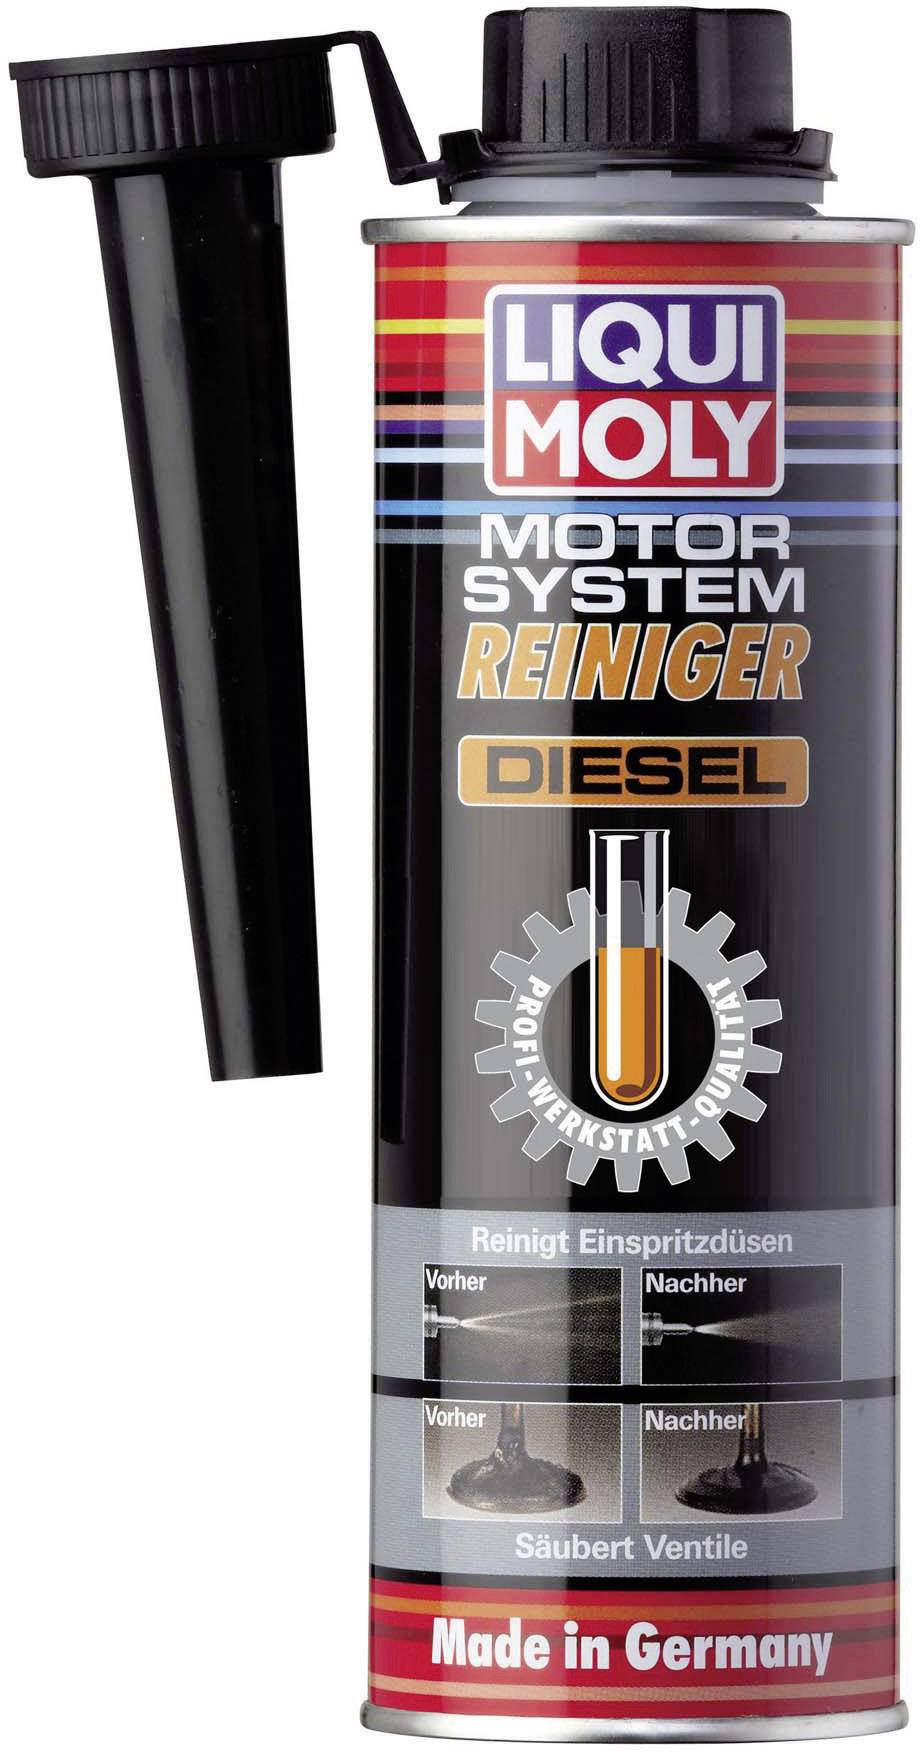 Liqui Moly Motor System Cleaner Diesel 5128-300 300 ml